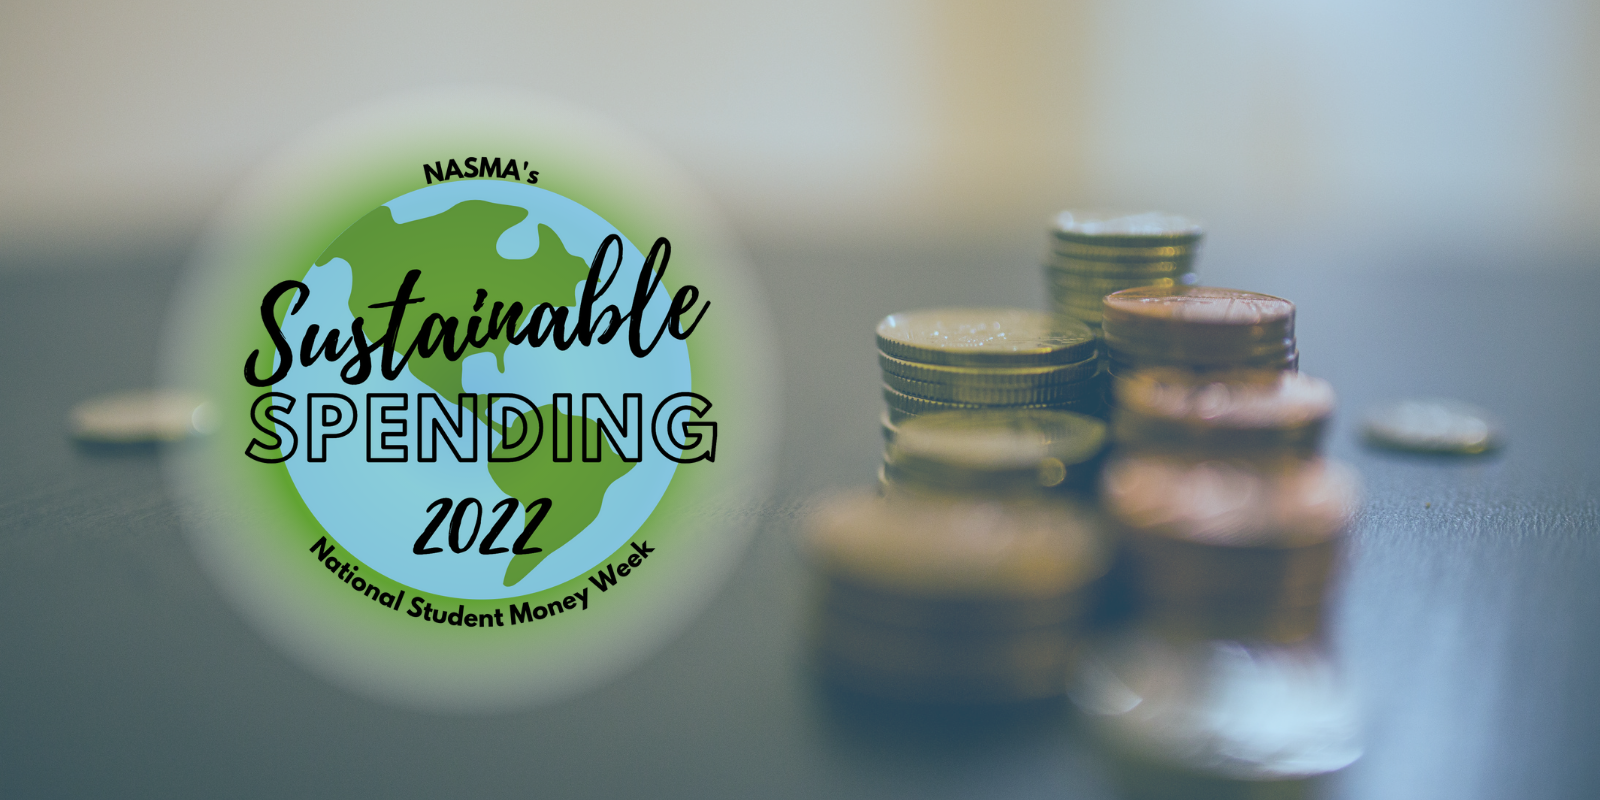 "NASMA's Sustainable Spending 2022. National Student Money Week."